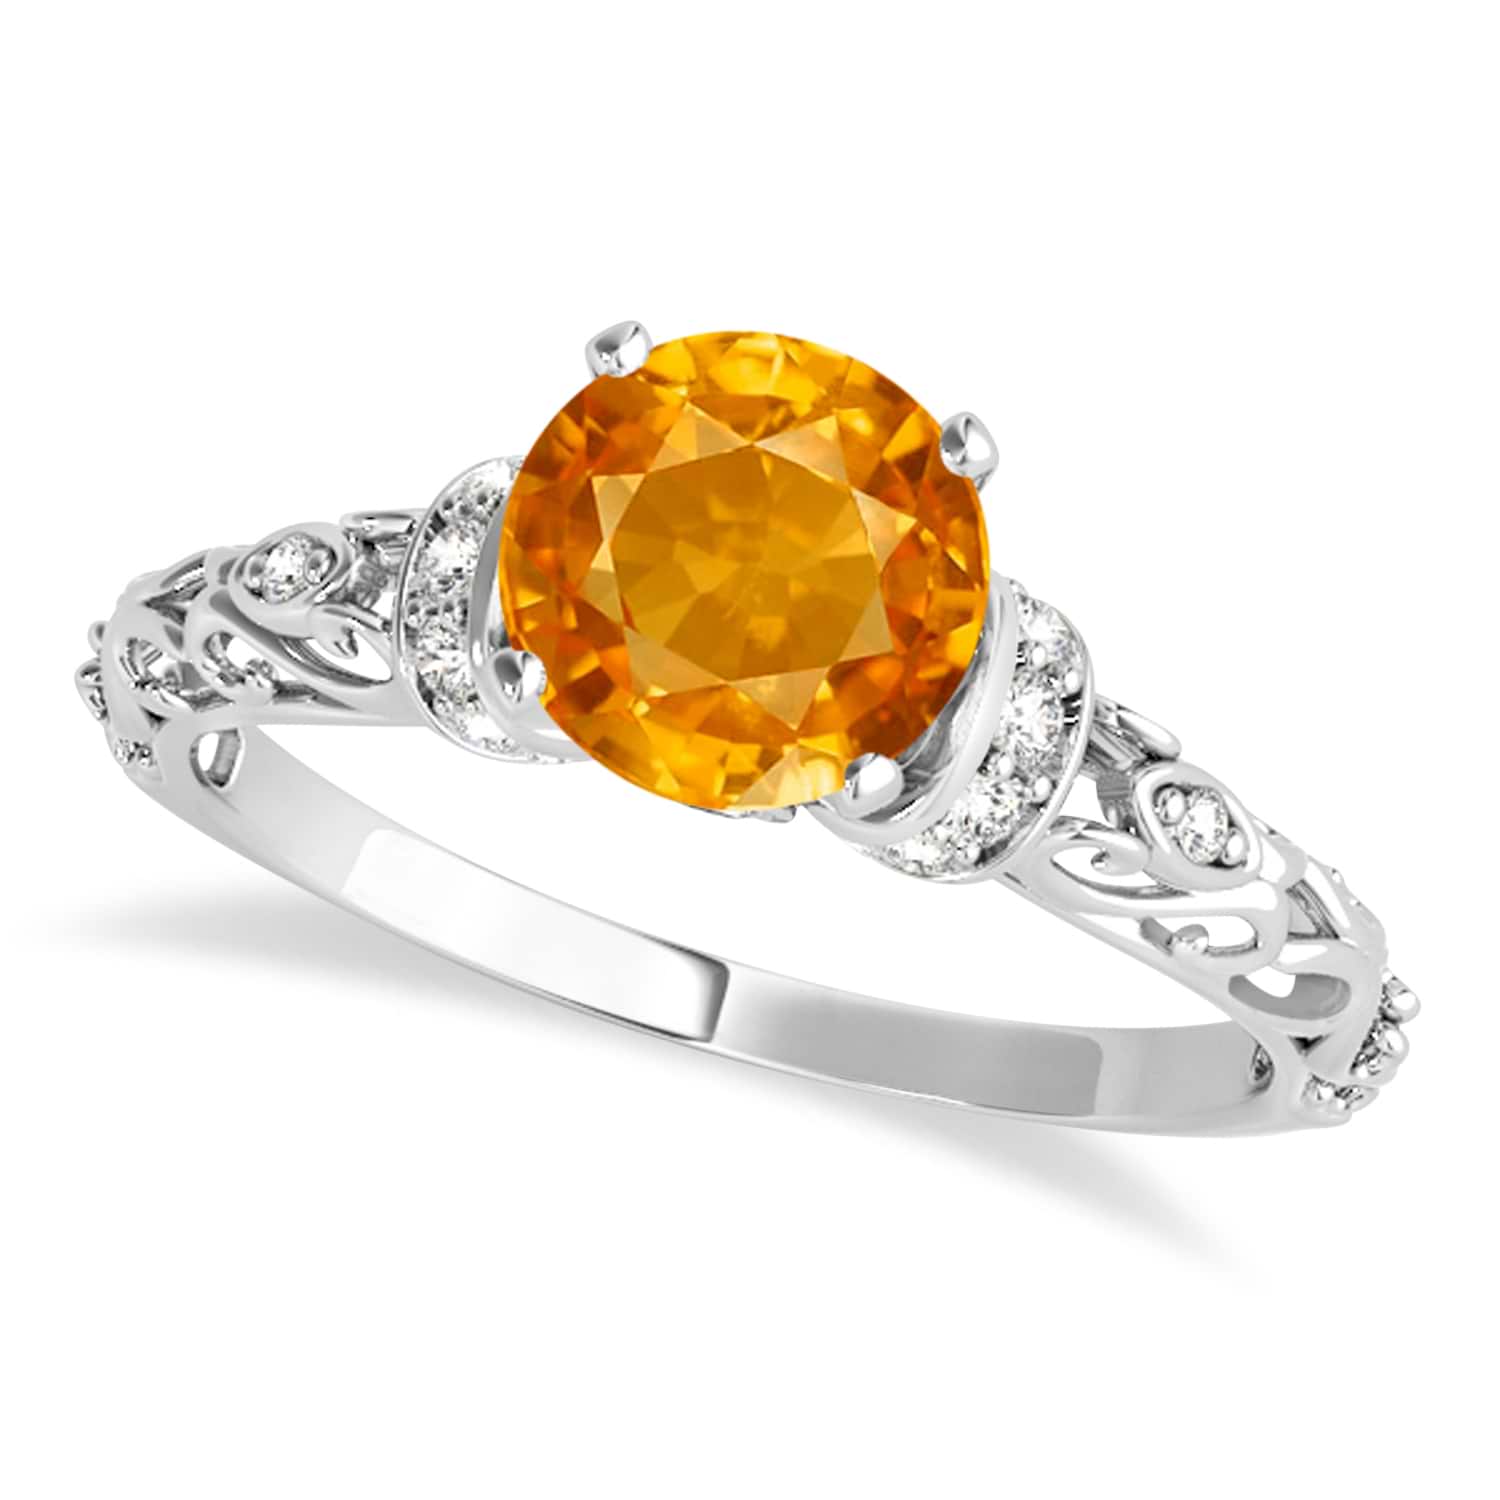 Citrine & Diamond Antique Style Engagement Ring 14k White Gold (1.12ct)